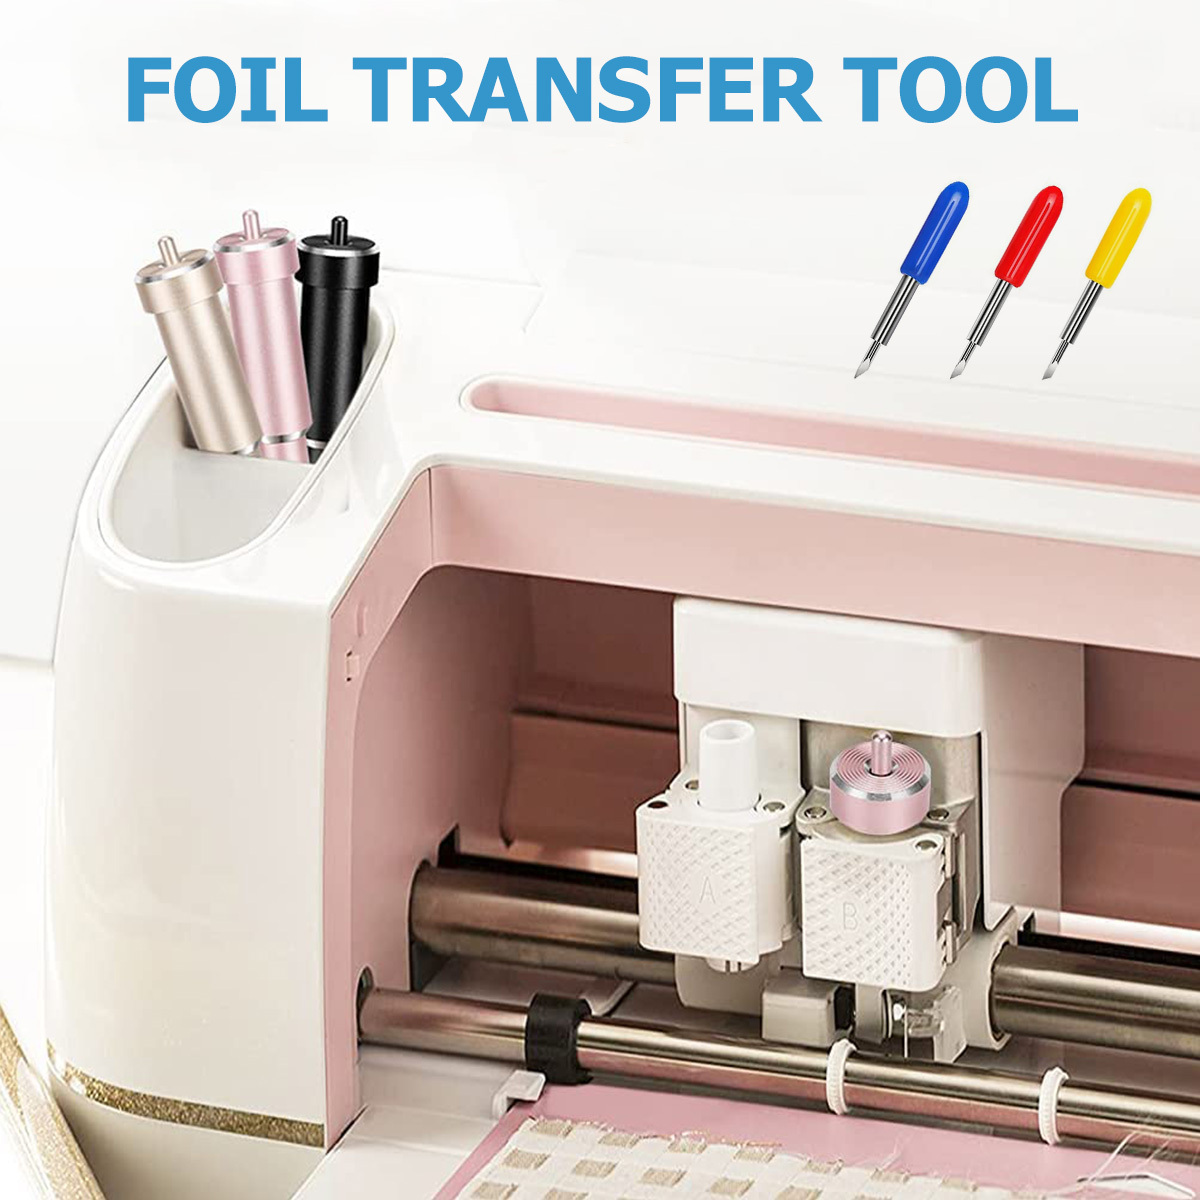 Cricut Maker Foil Transfer Sheets  Foil Transfer Cricut Maker 3 - 3 2 Air  4 Tool - Aliexpress